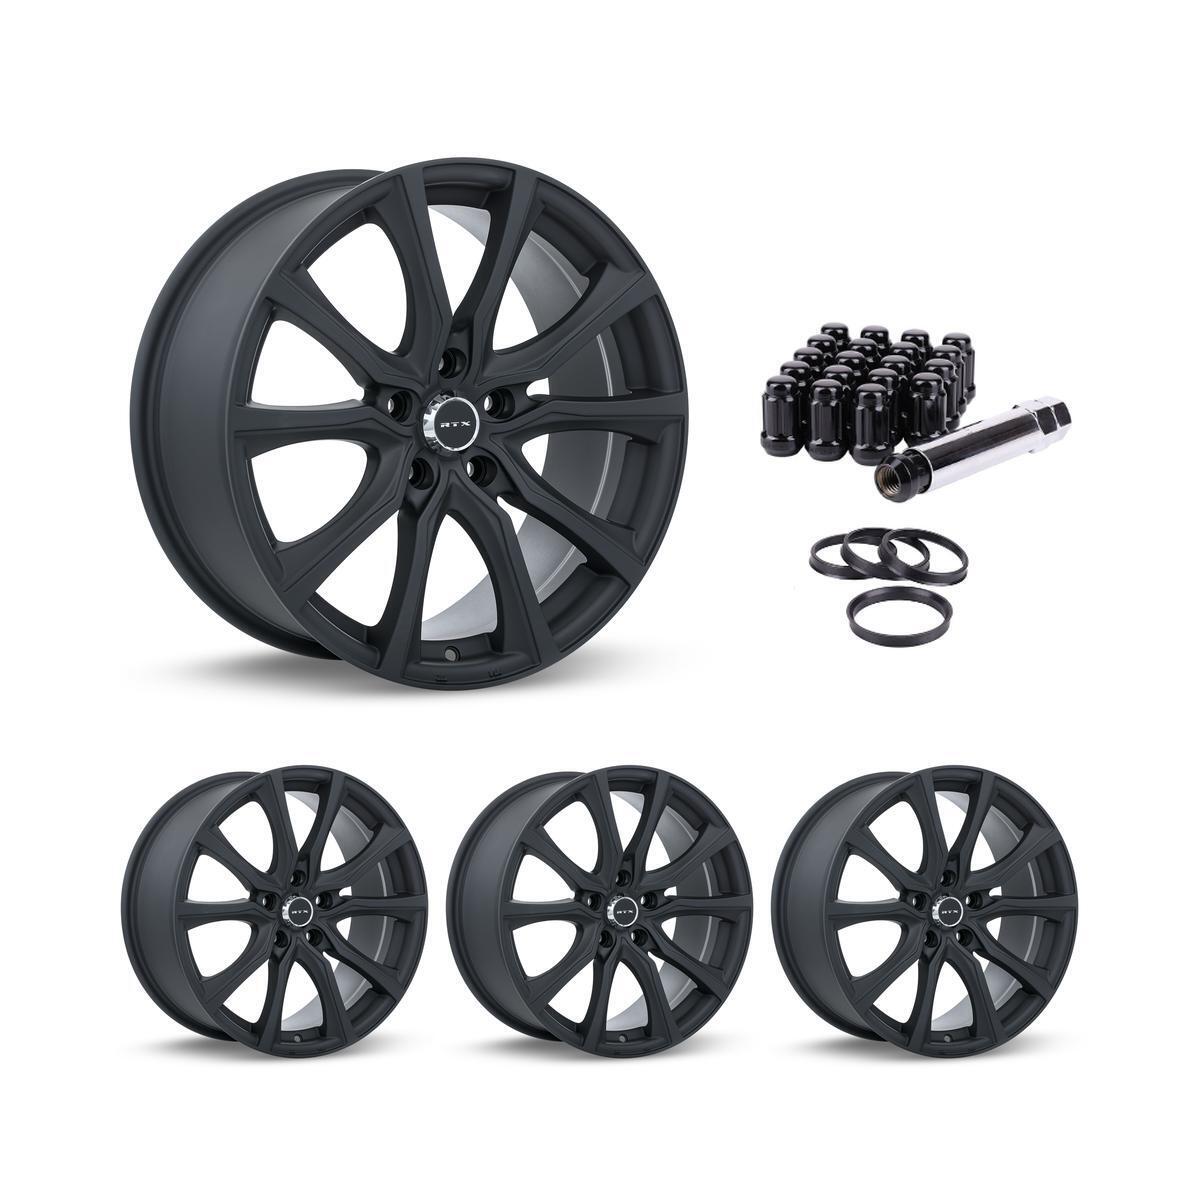 Wheel Rims Set with Black Lug Nuts Kit for 00 BMW 323Ci P826586 17 inch